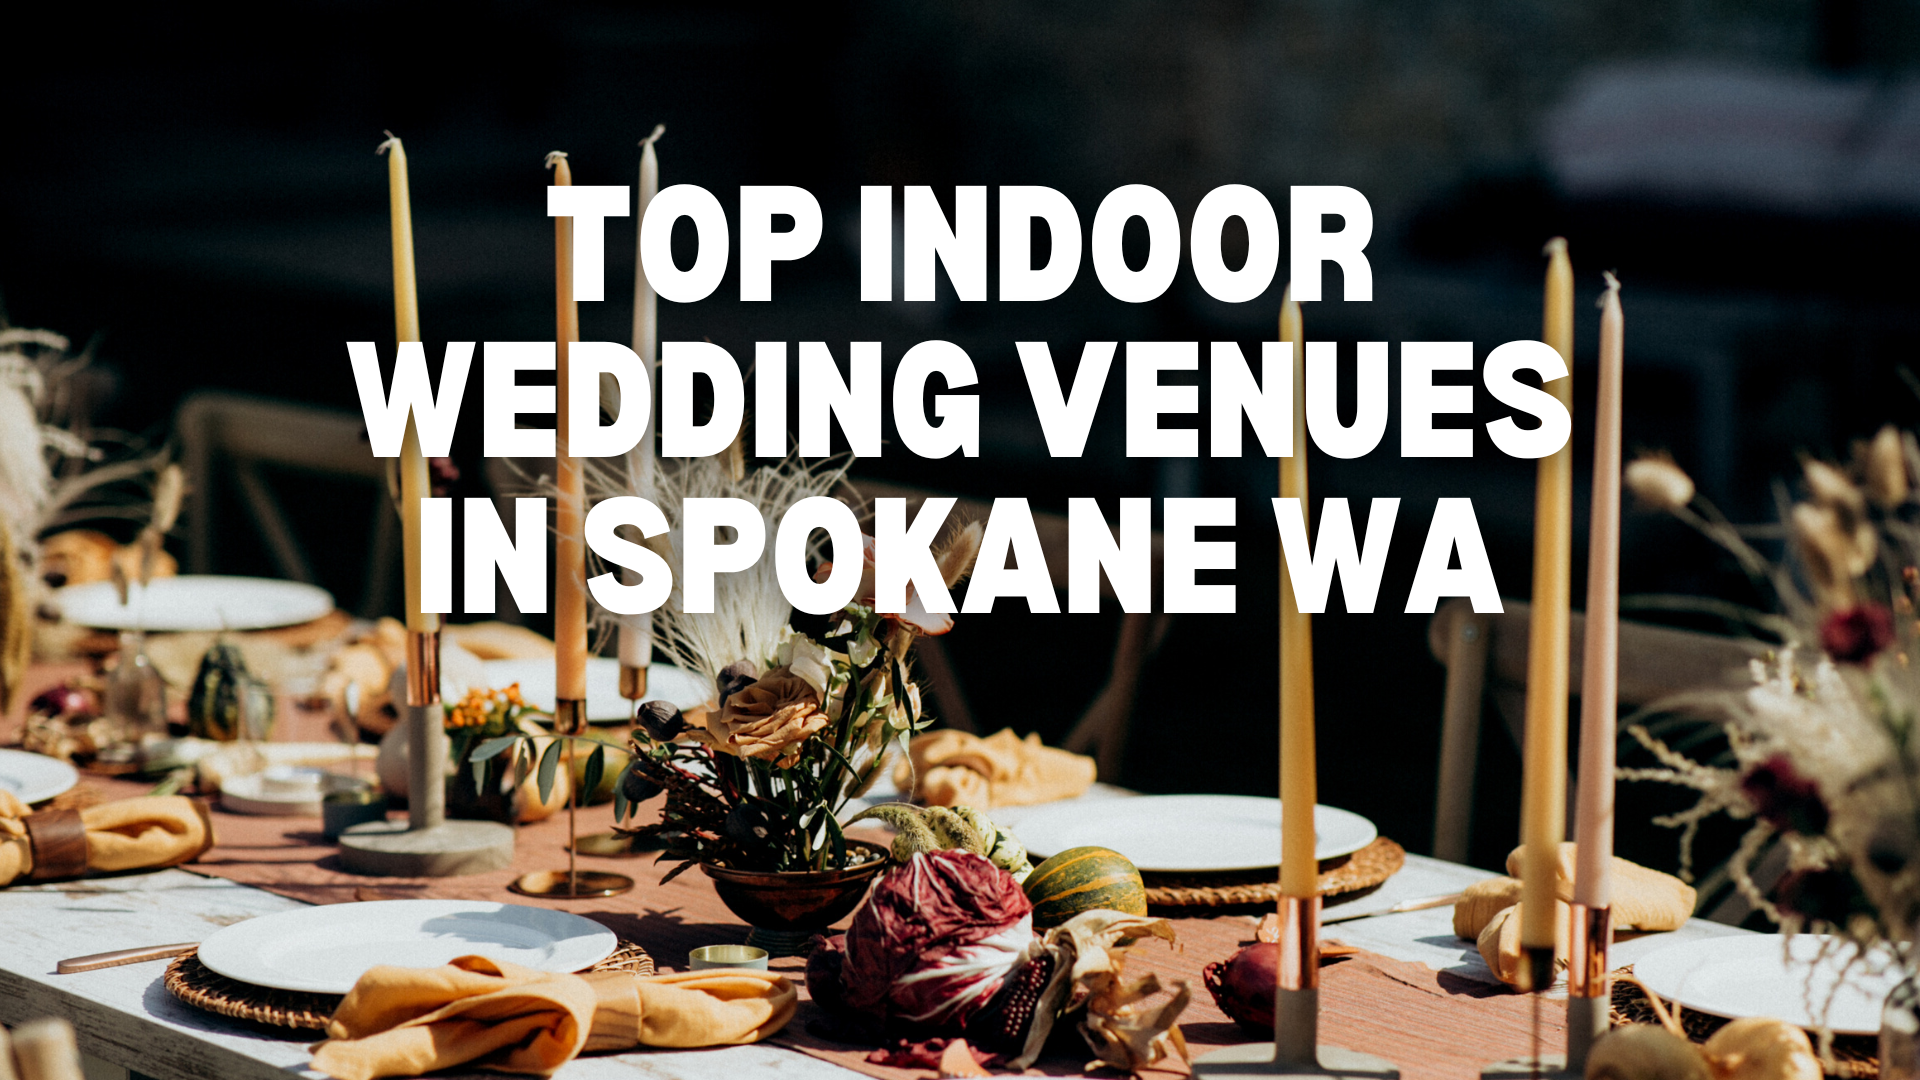 Spokane Indoor Wedding Venues: Commellini Estate